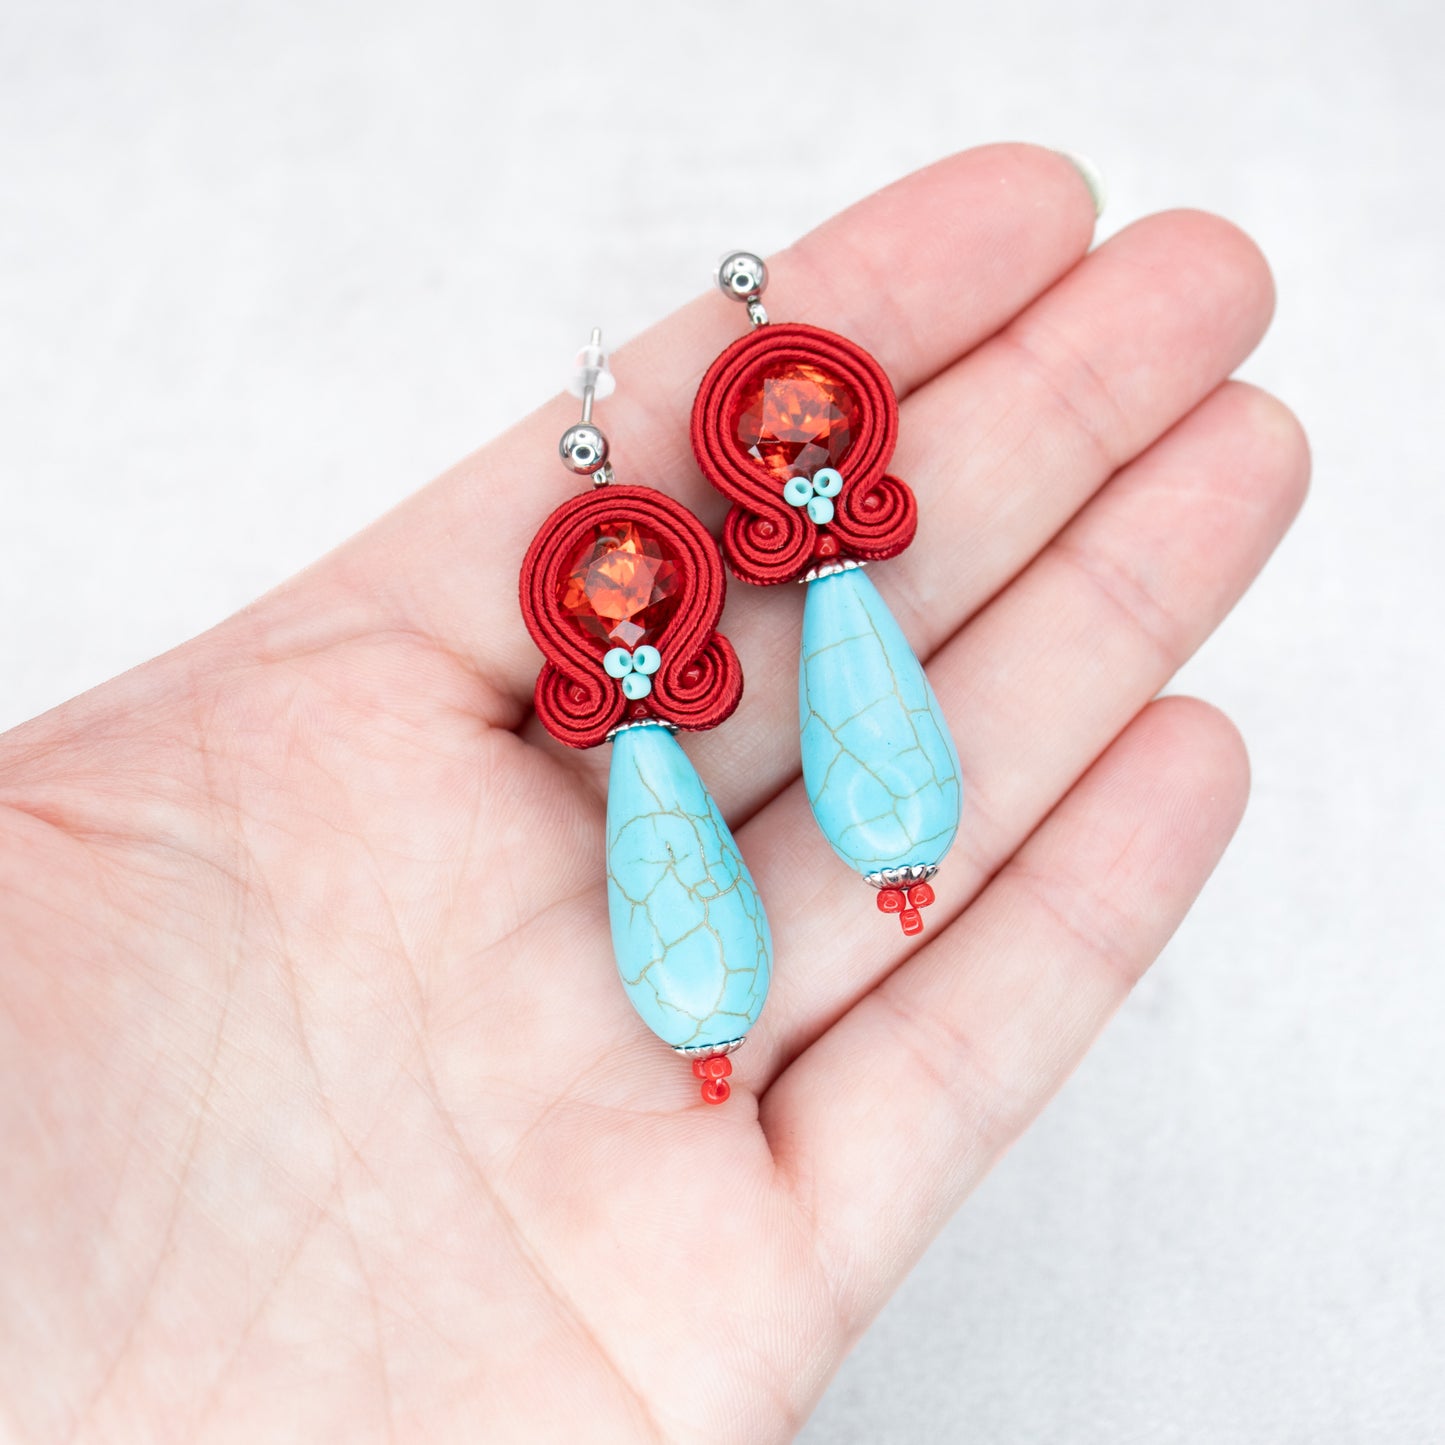 Red soutache earrings with howlite earrings. Statement and lightweight handmade earrings.